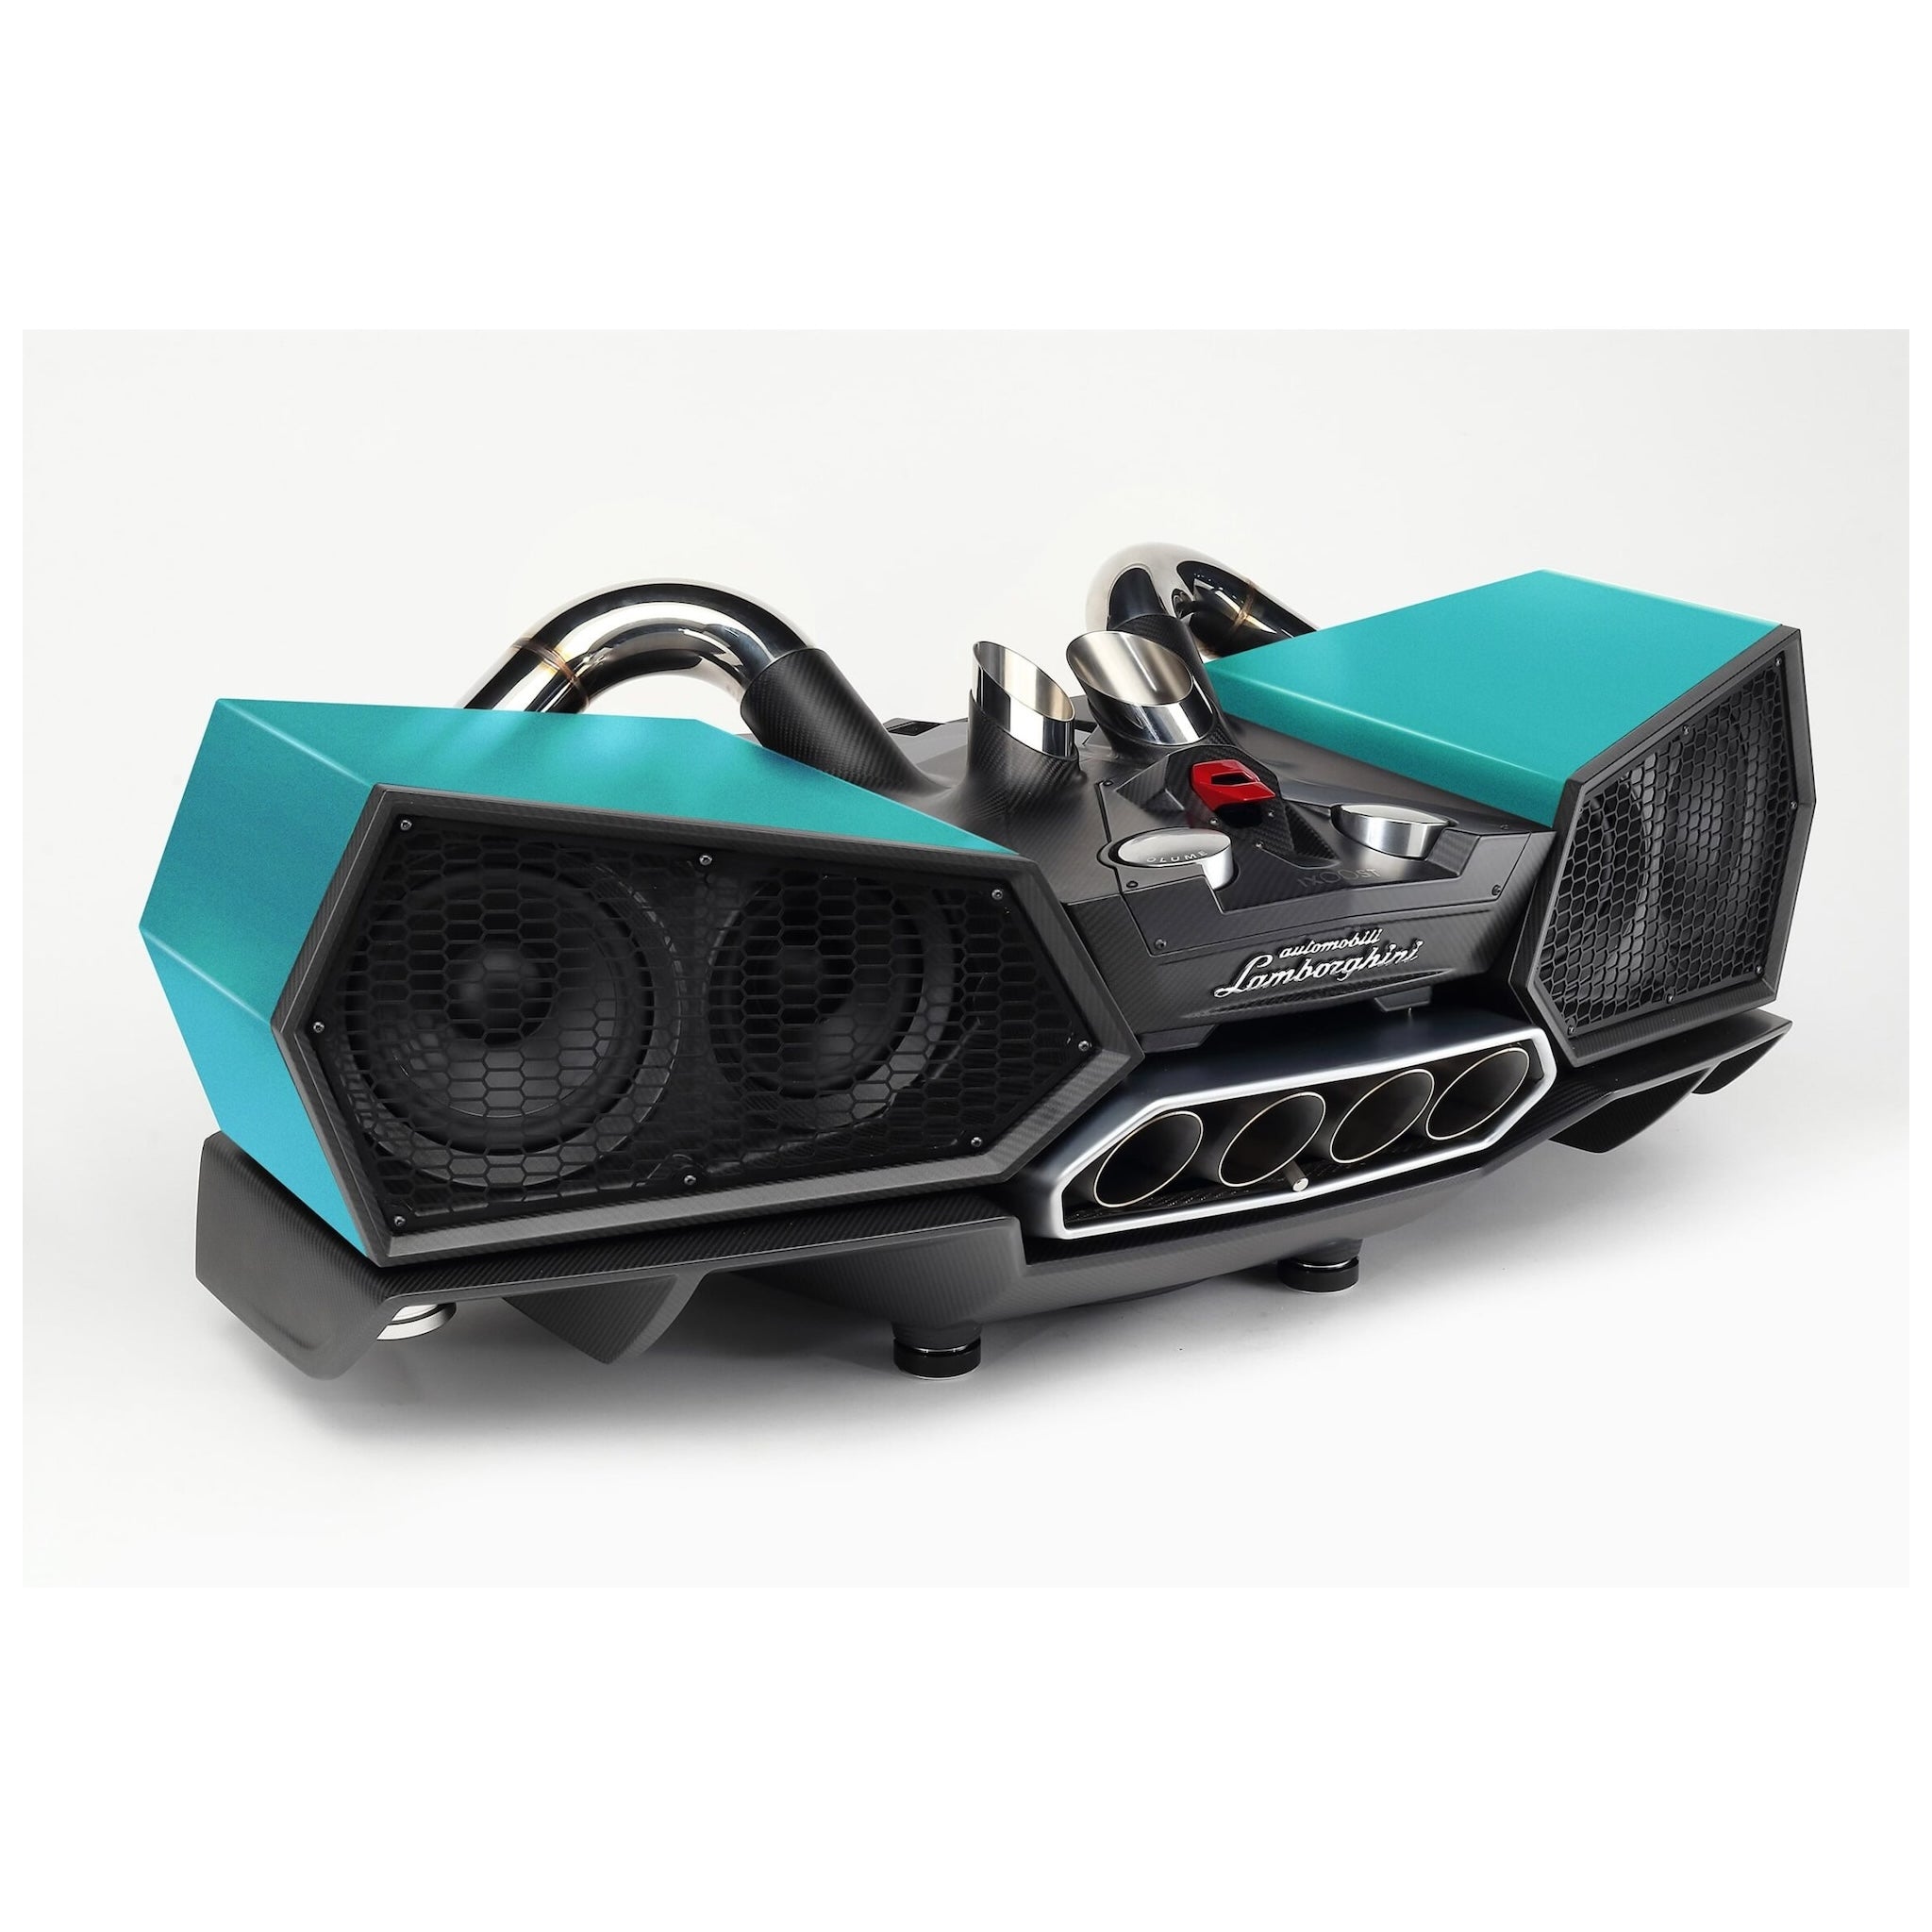 IXOOST Esavox For Automobili Lamborghini - Bluetooth Speaker, IXOOST, Speaker - AVStore.in